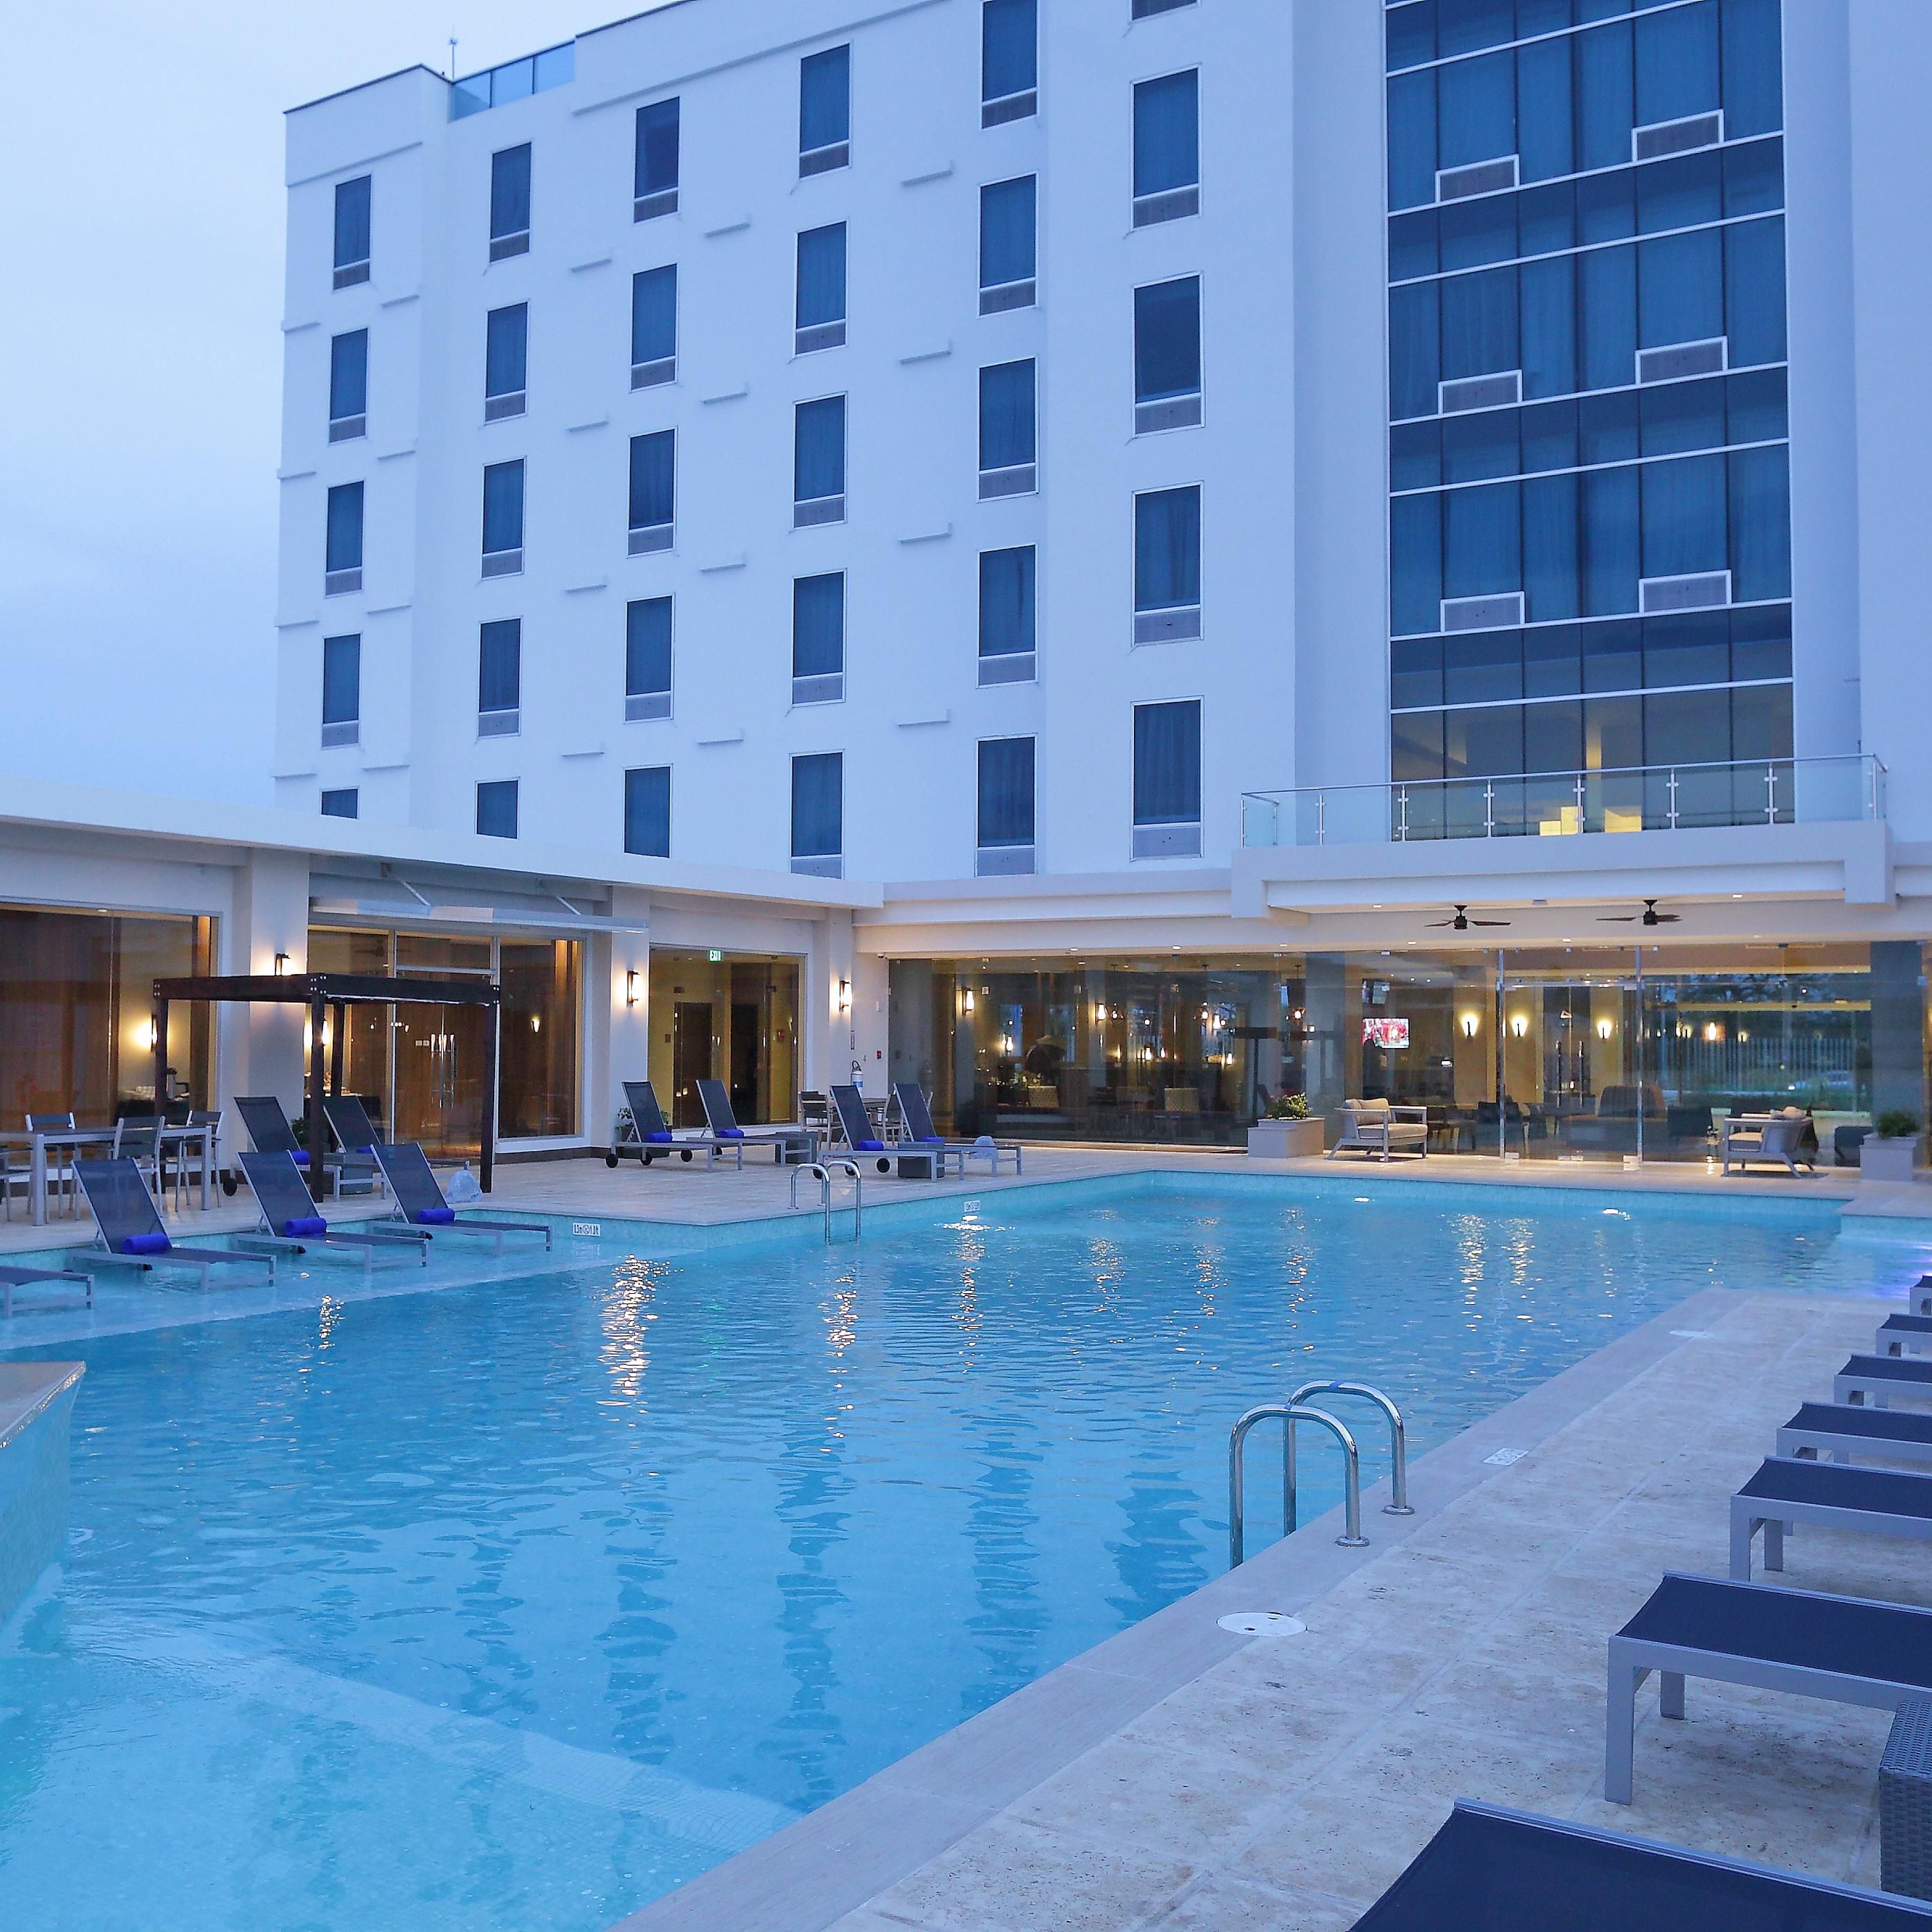 Swmming Pool at Crowne Plaza Panama Airport Hotel